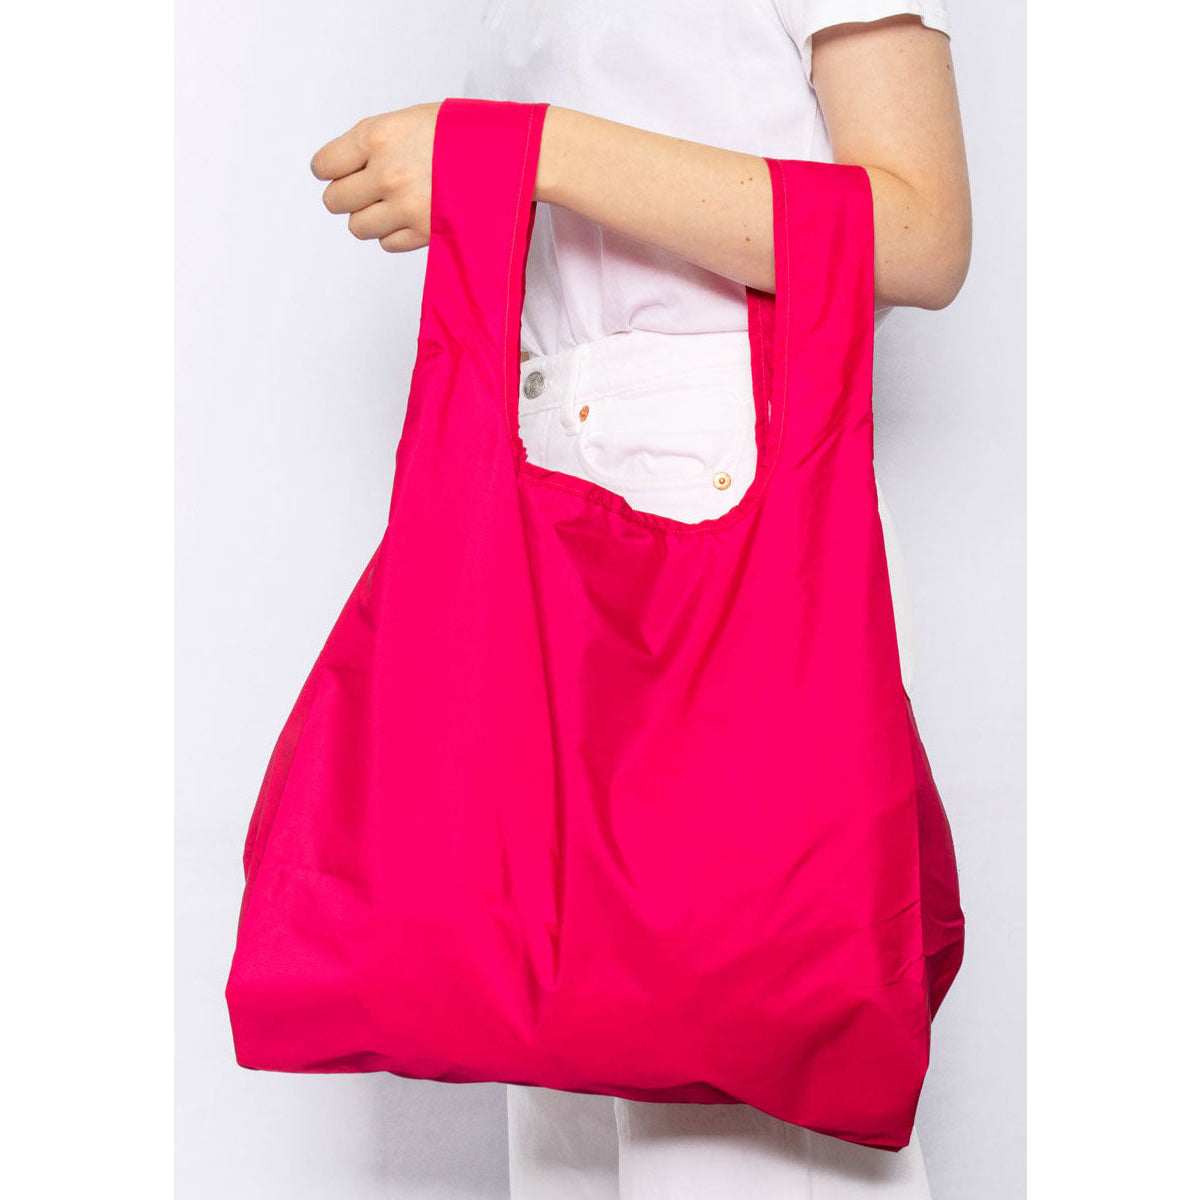 Kind Bag Reusable Foldaway Tote - Berry Pink 1